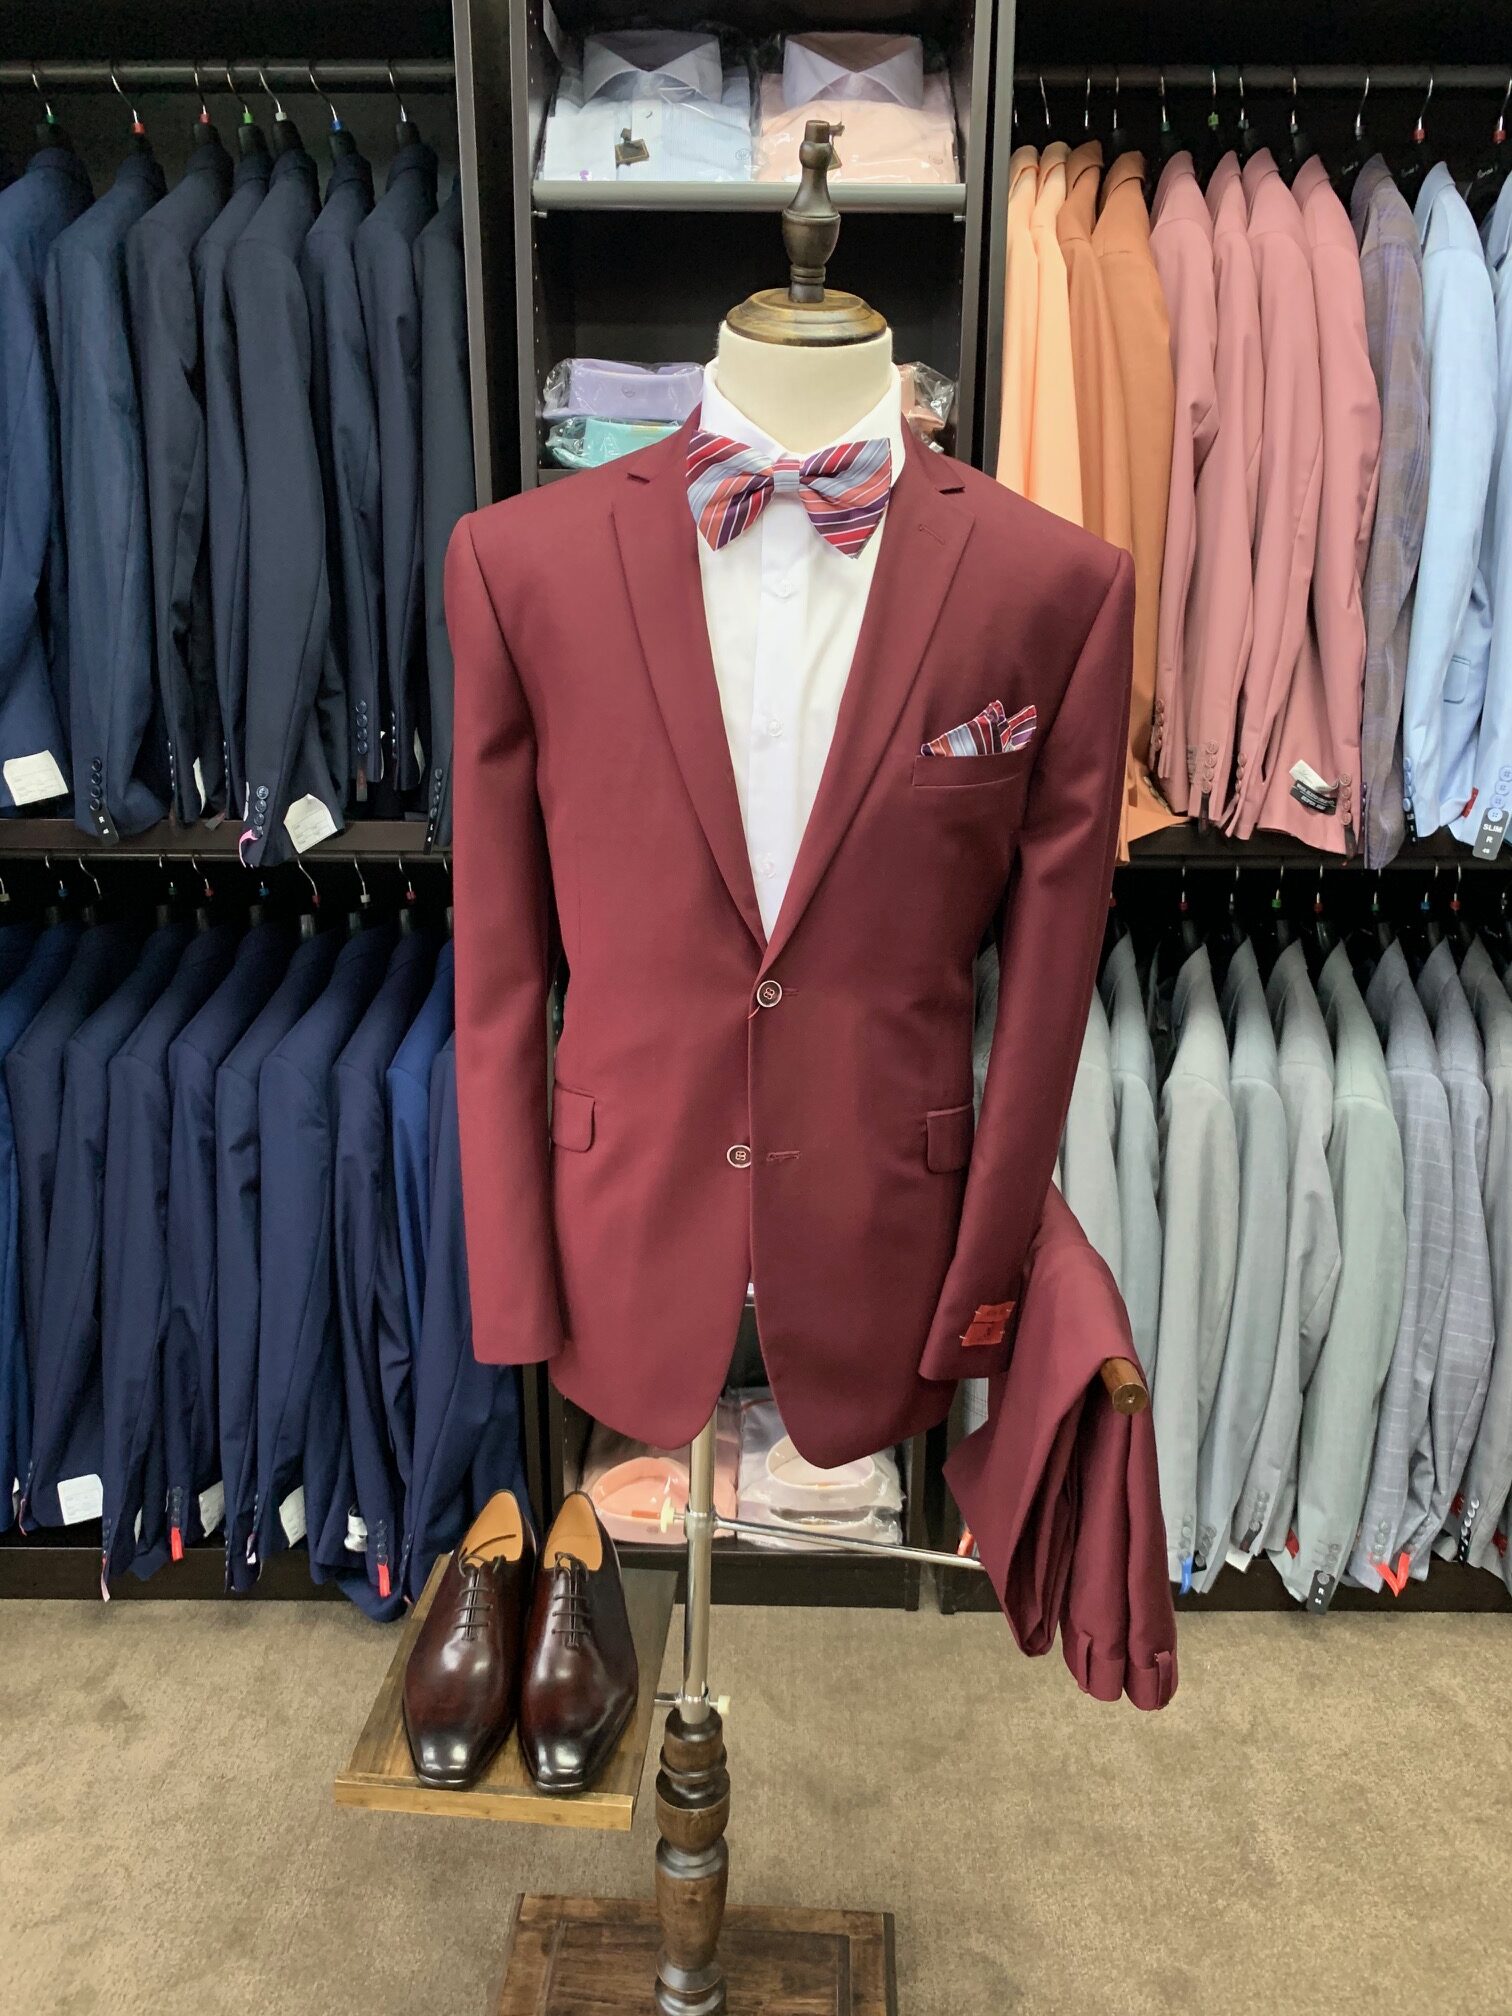 Suit Selection - The Gentlemens Closet